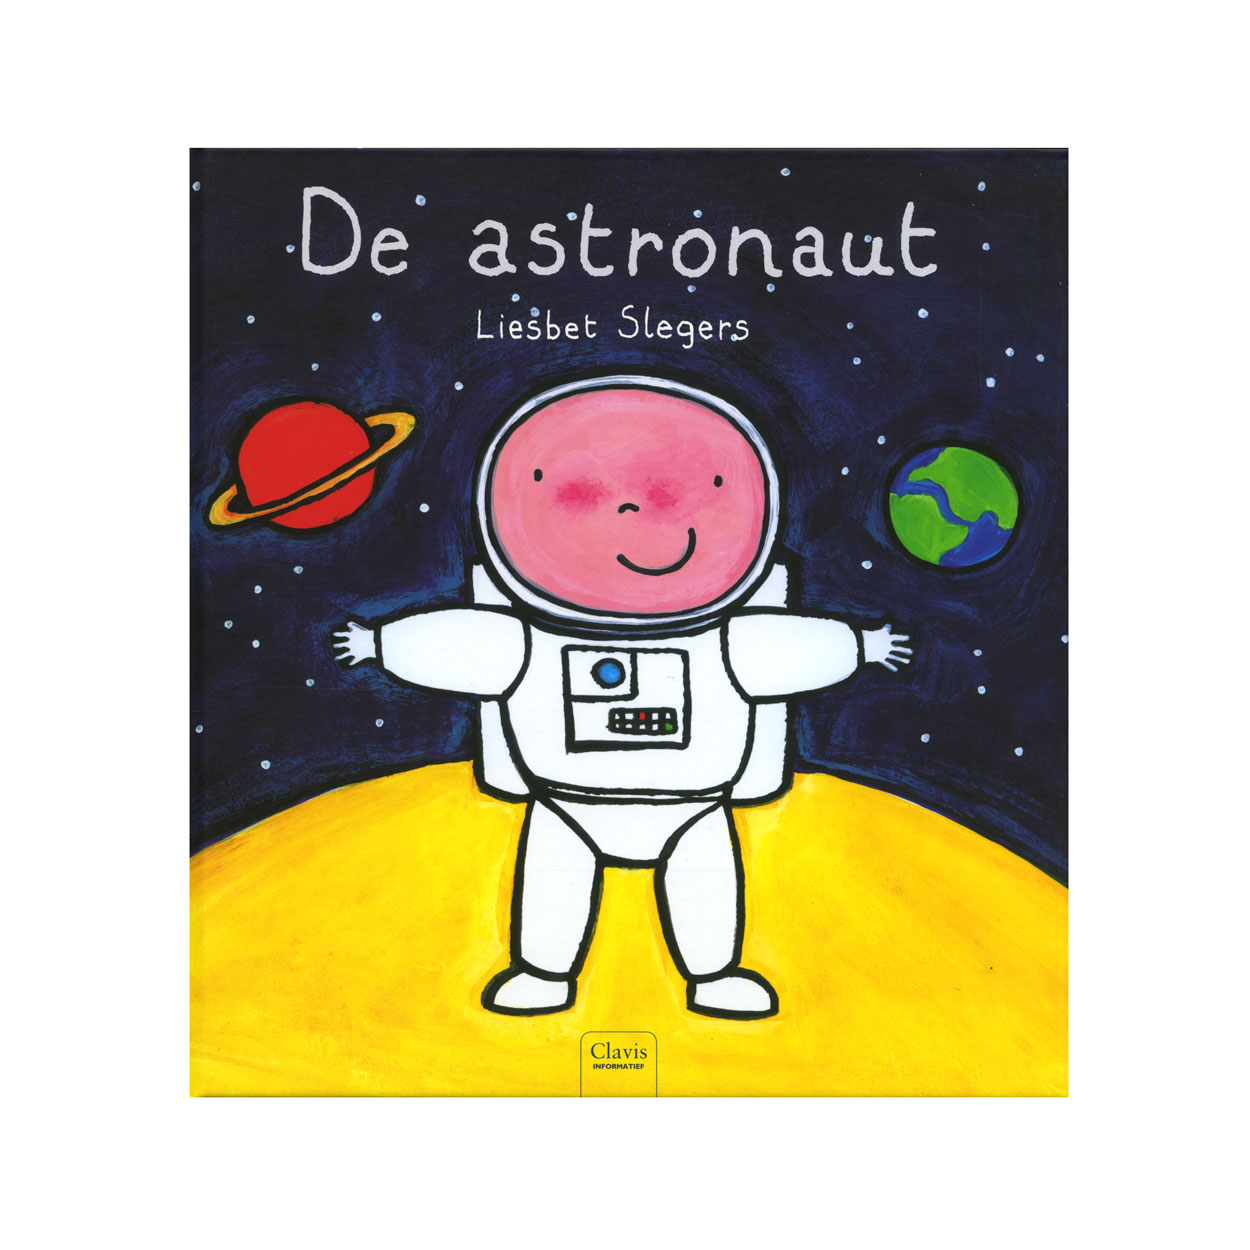 De astronaut